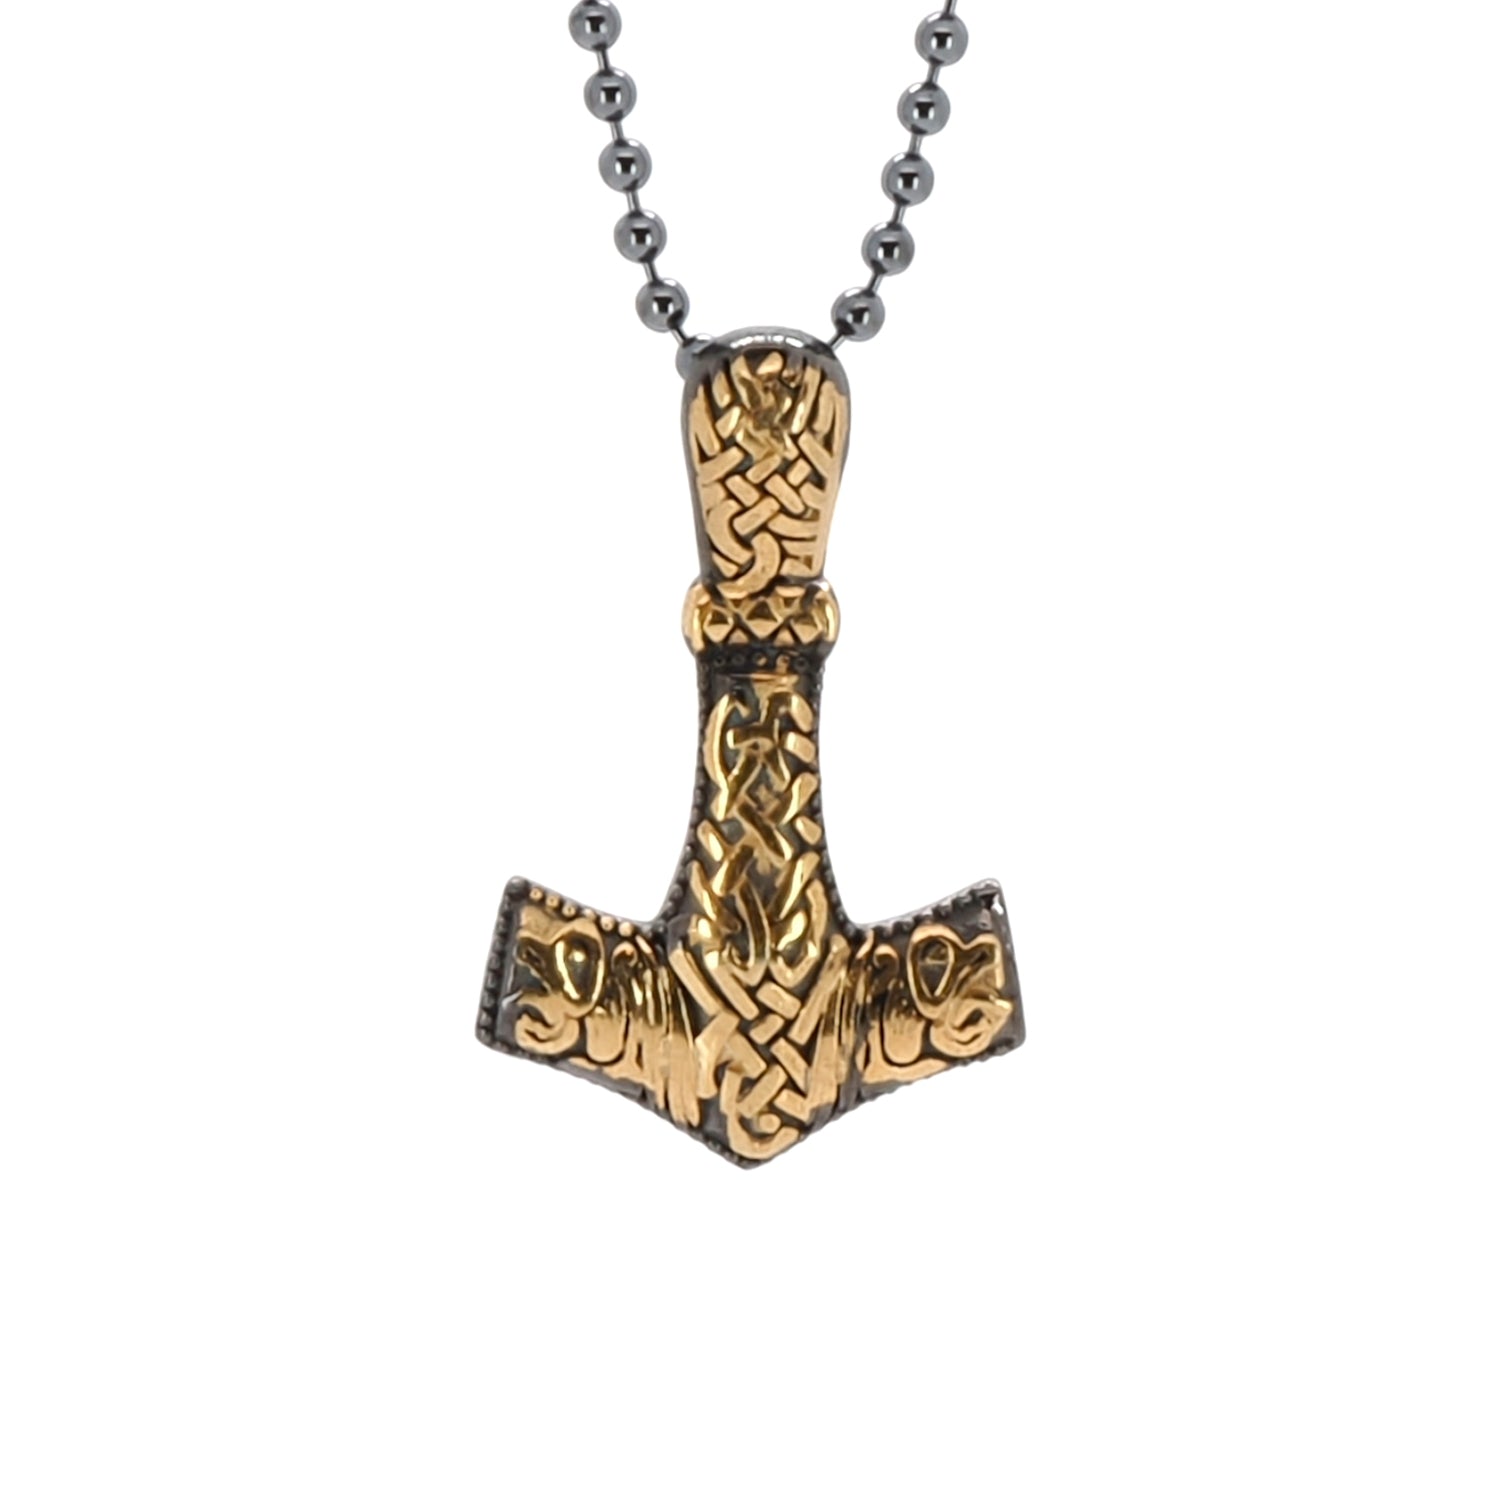 Thor Hammer Pendant: A divine blend of strength and elegance